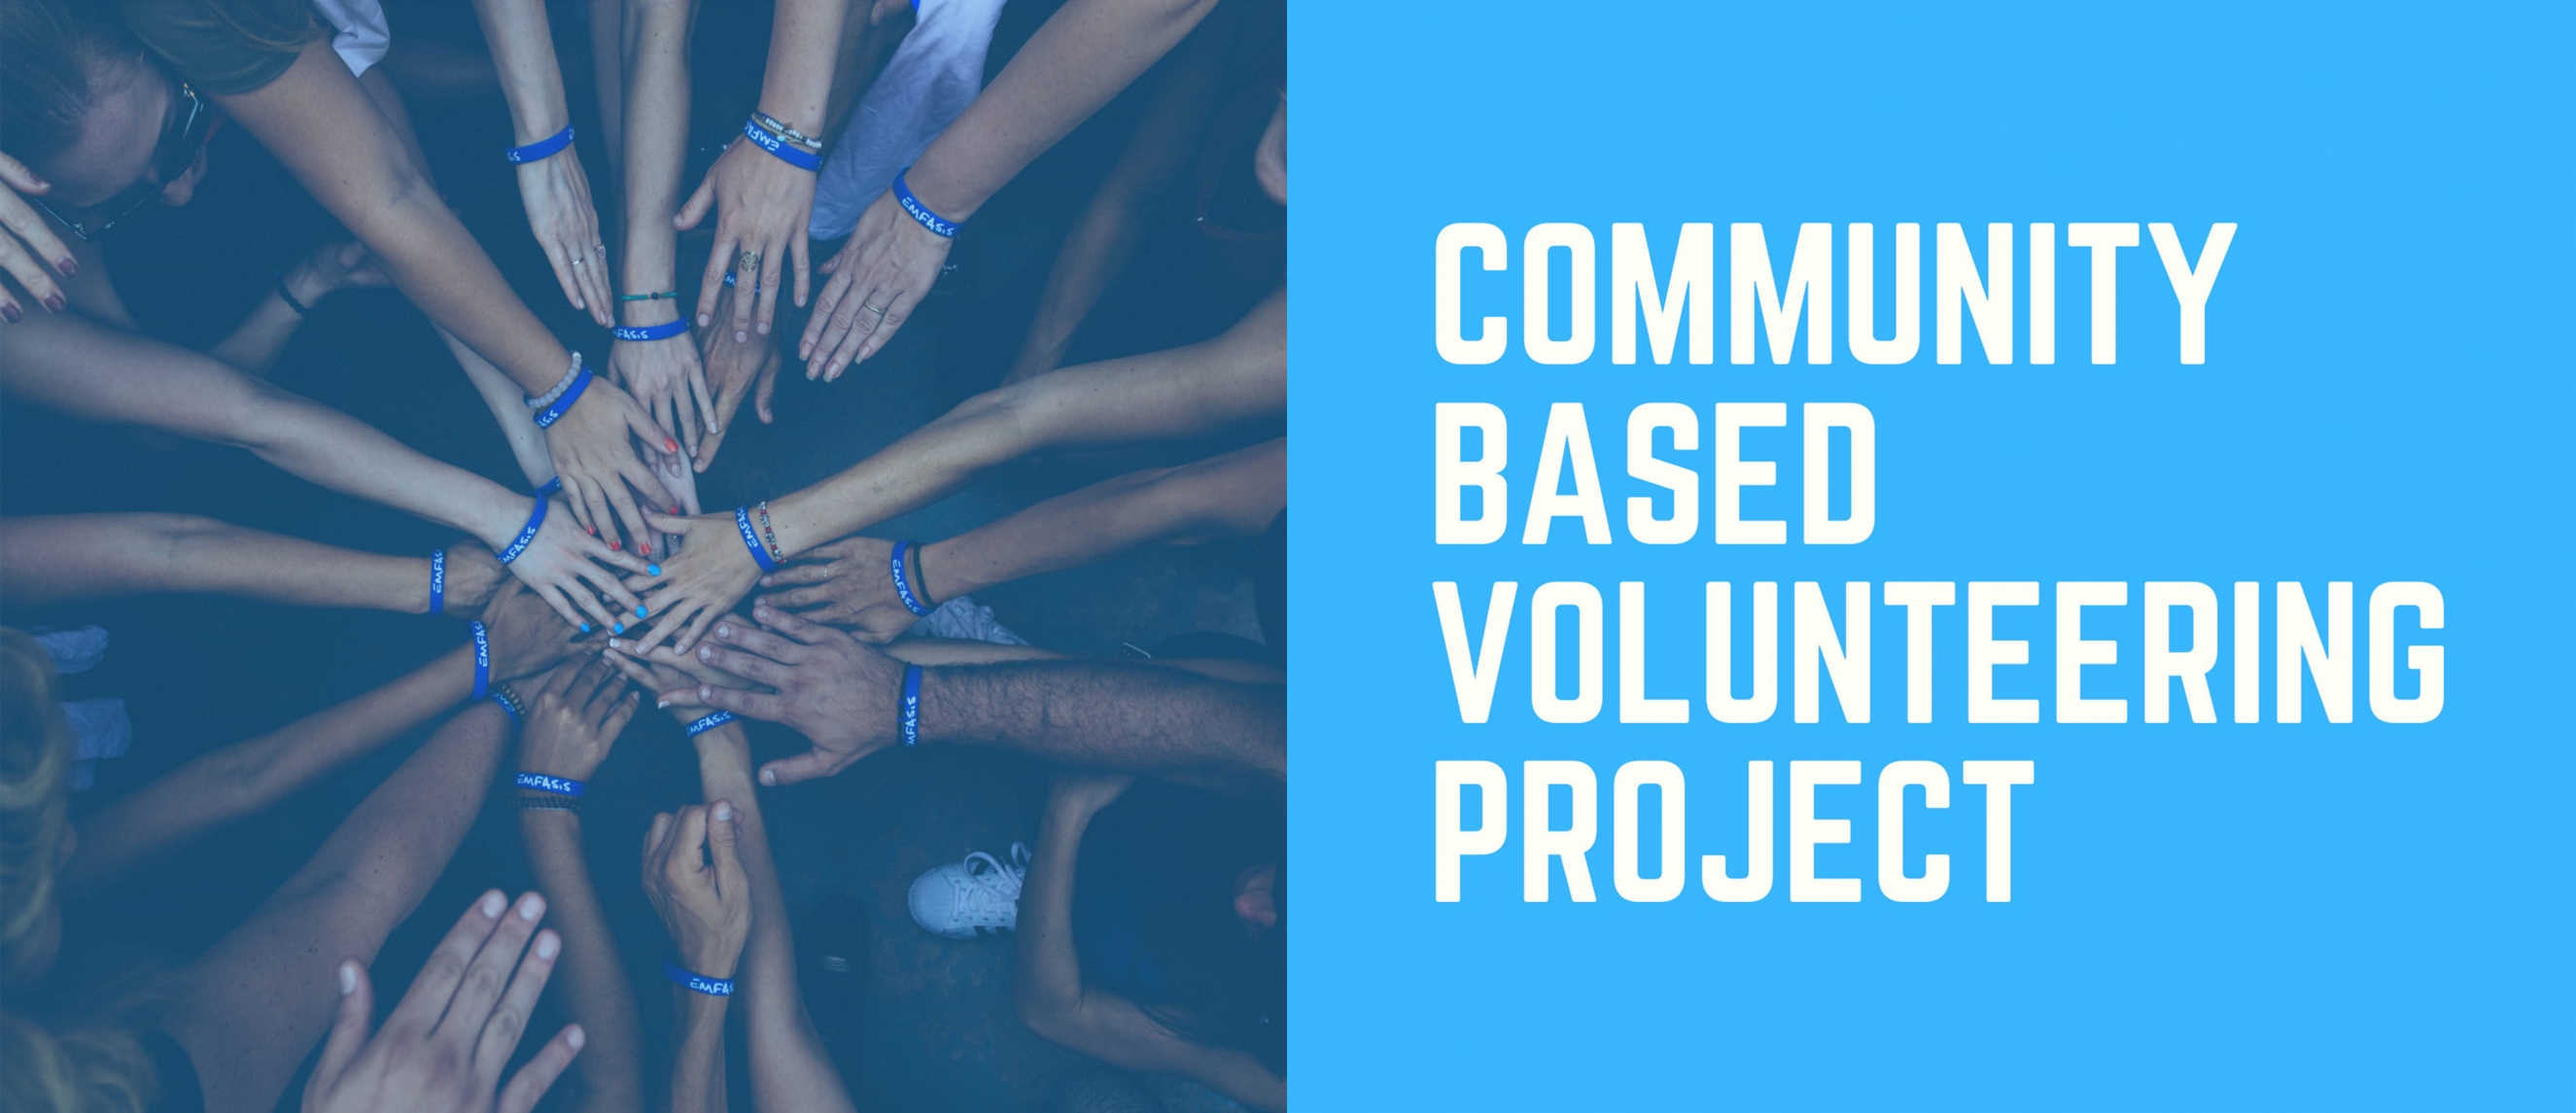 Community Based Volunteering Project